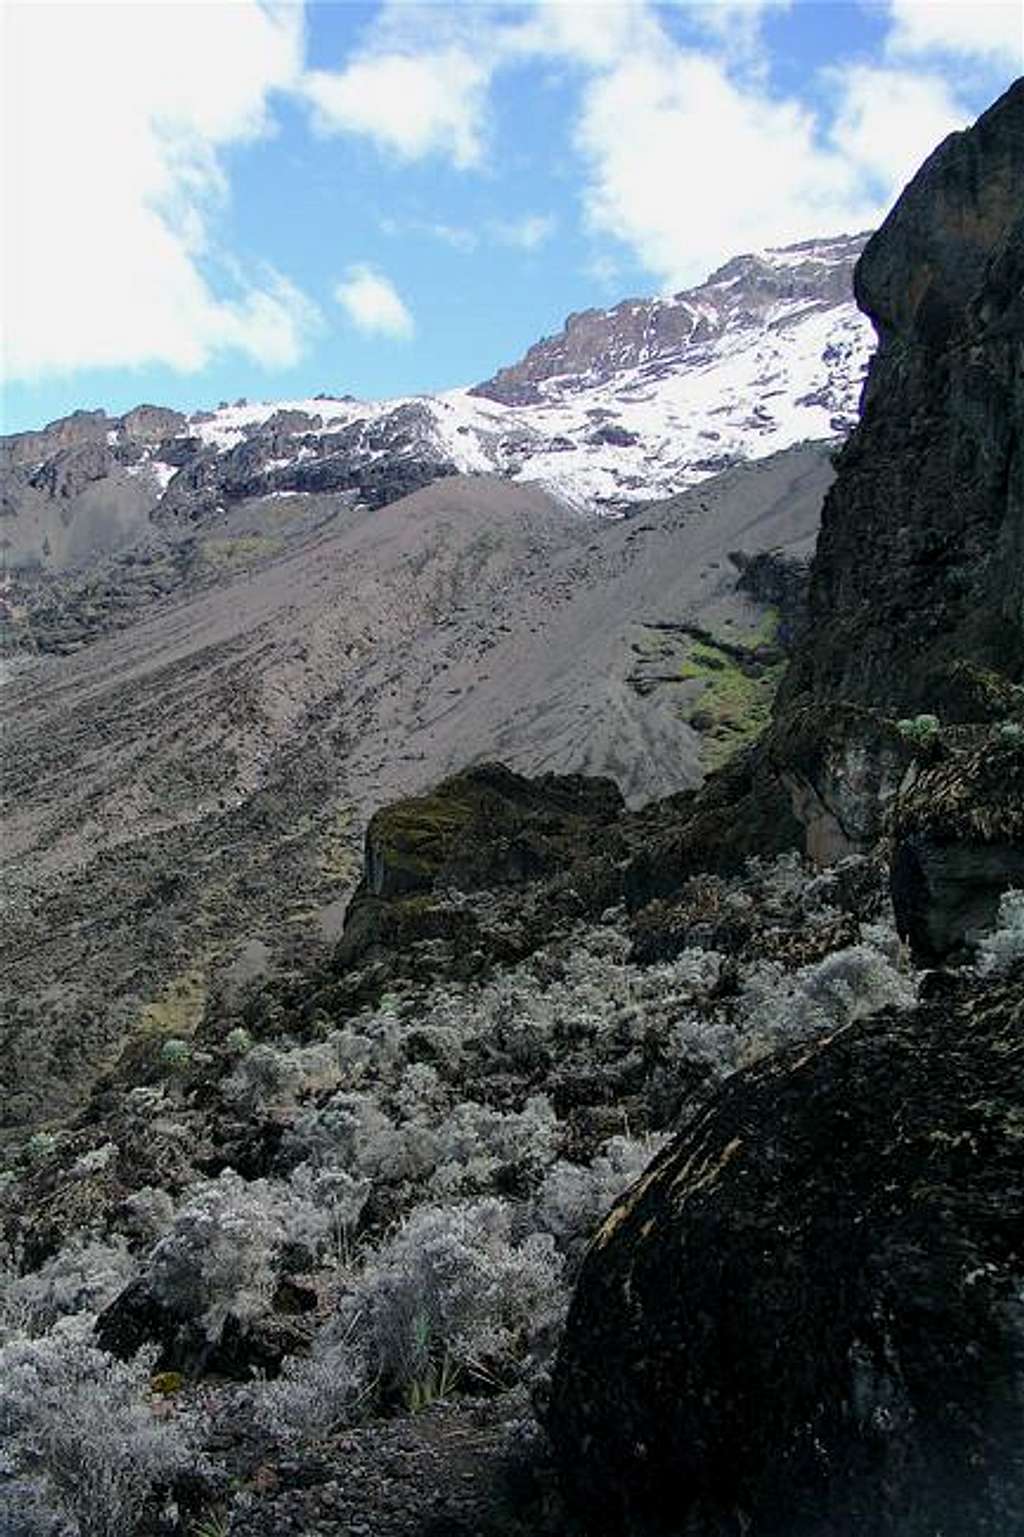 Mt. Kilimanjaro Jan 2005